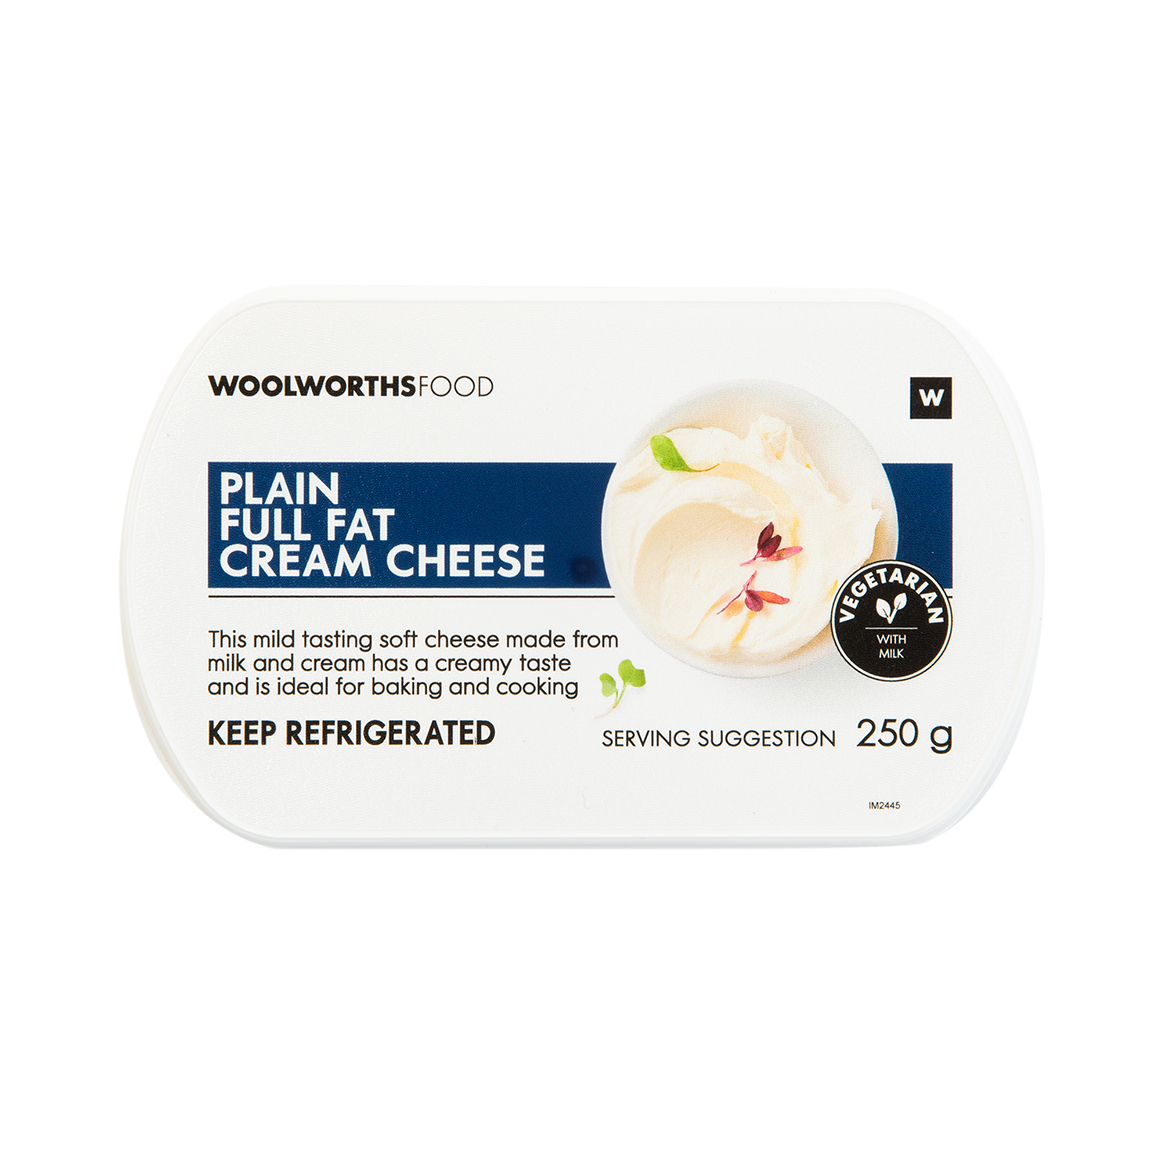 Plain Full Fat Cream Cheese 250 G 6009184246475 ?V=WbNZ&o=eyJidWNrZXQiOiJ3dy1vbmxpbmUtaW1hZ2UtcmVzaXplIiwia2V5IjoiaW1hZ2VzL2VsYXN0aWNlcmEvcHJvZHVjdHMvaGVyby8yMDIxLTEyLTA4LzYwMDkxODQyNDY0NzVfaGVyby5qcGcifQ&